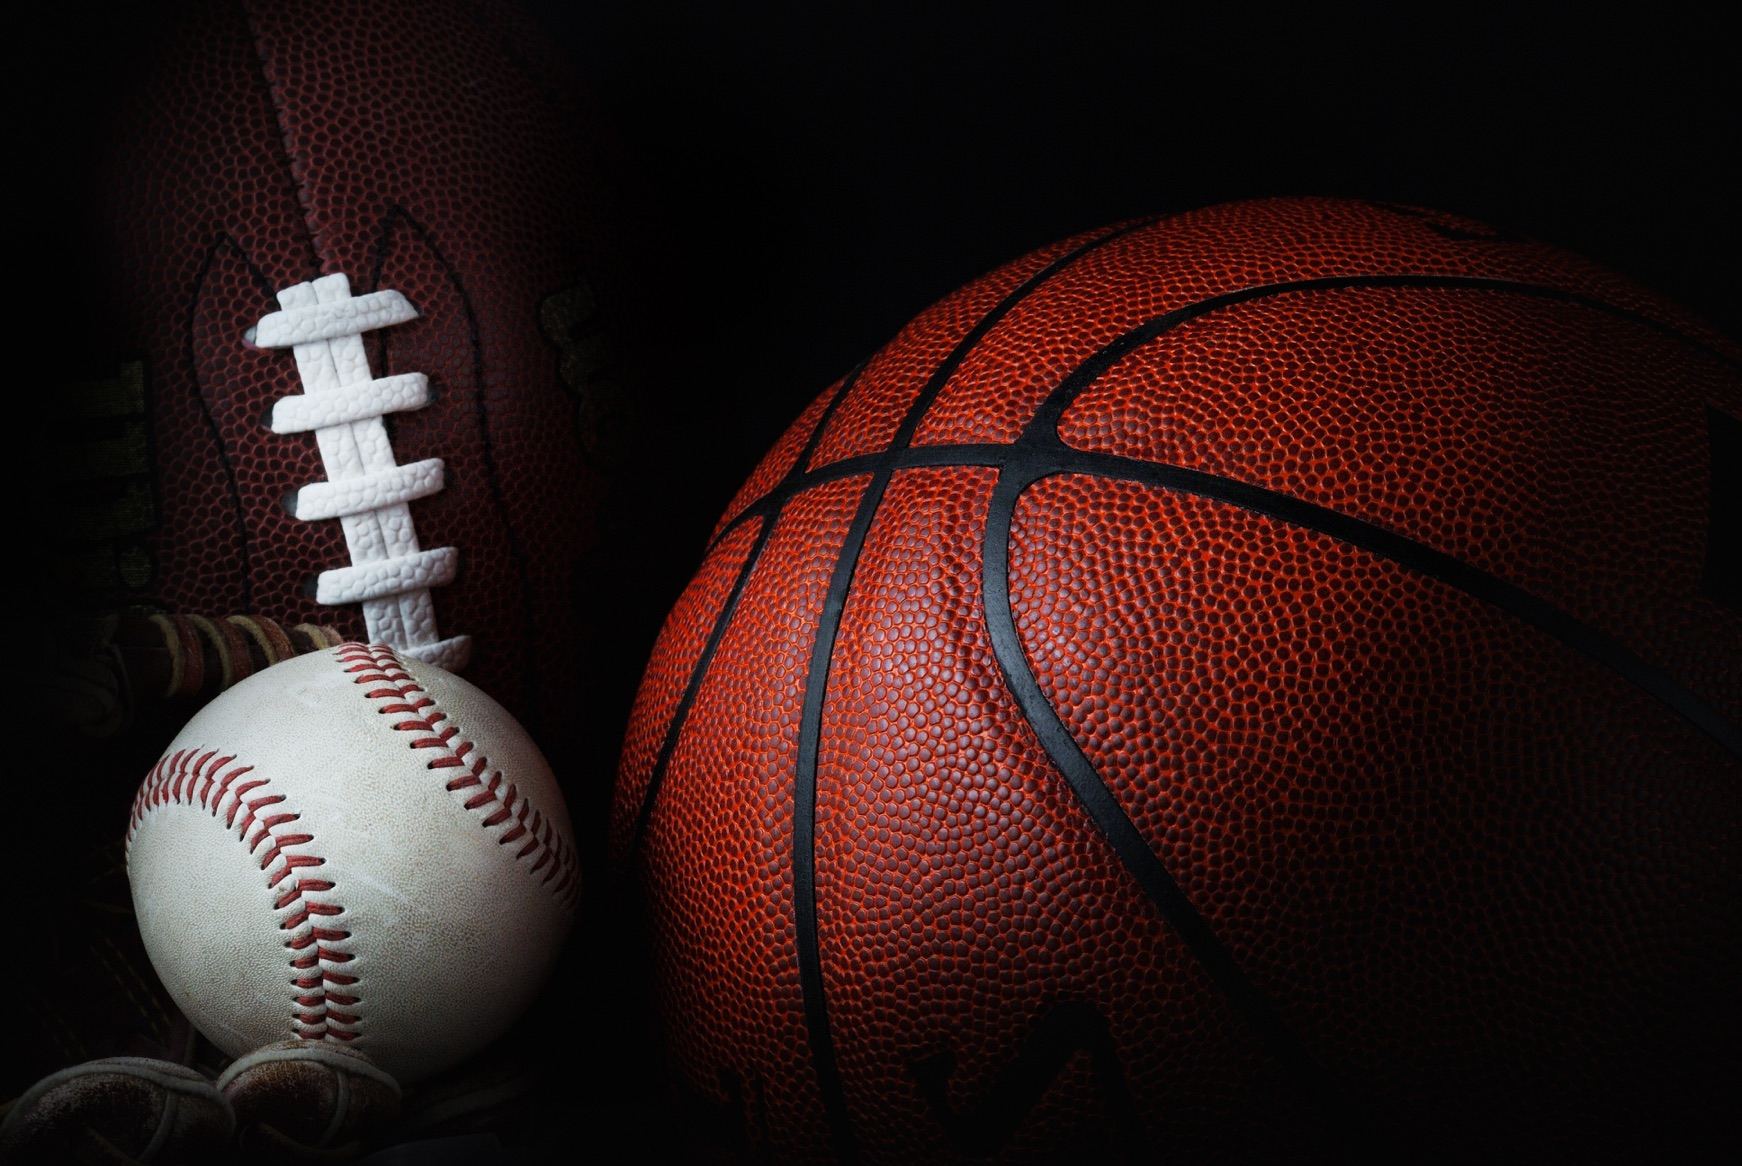 HD Ball Baseball Basketball Football Wallpaper and image collection for Desktop & Mobile. Free wallpaper download